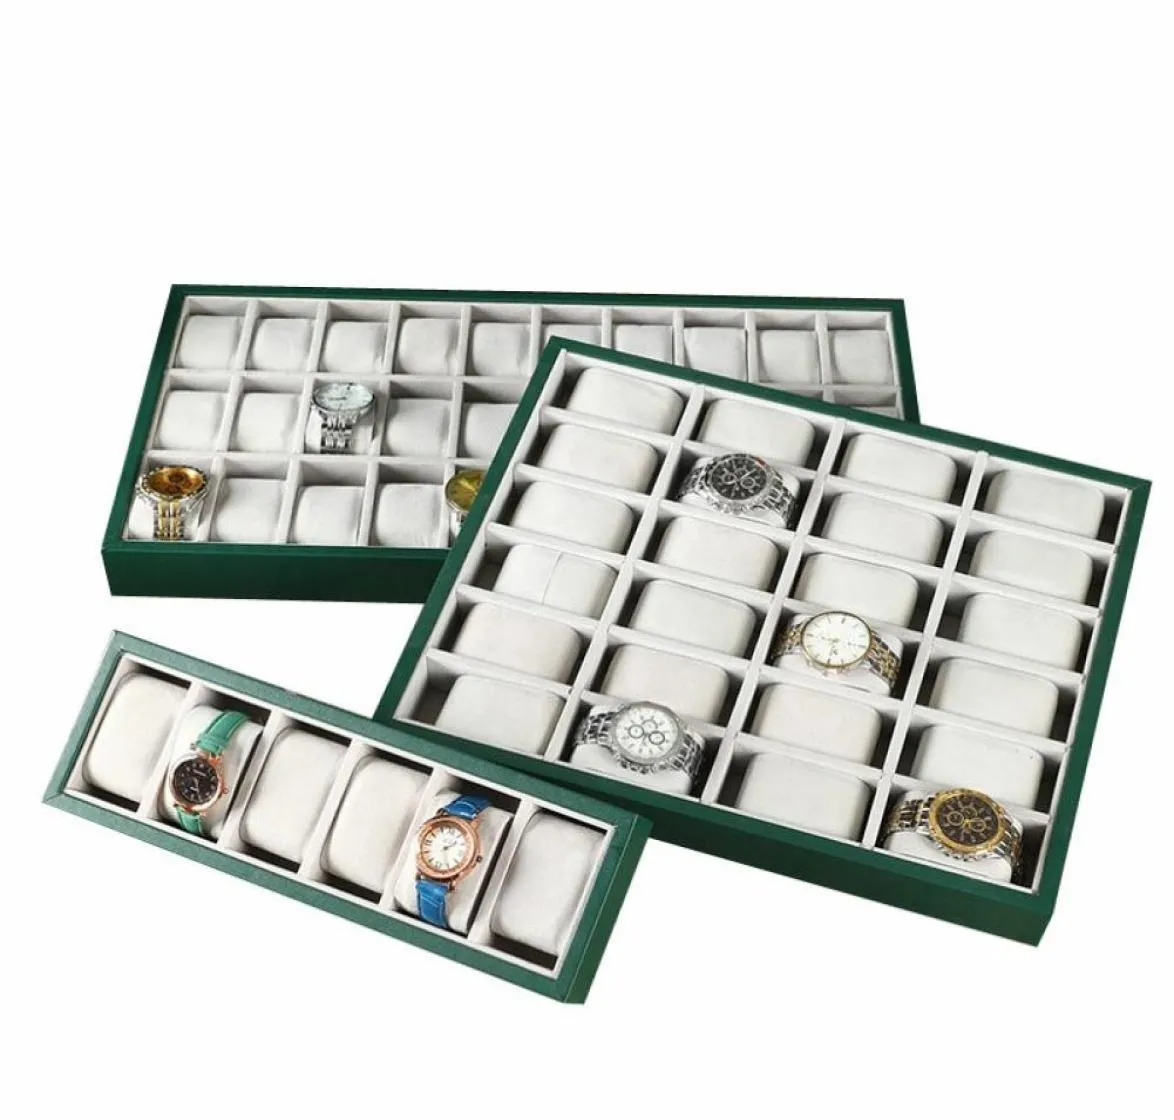 NEU GREEN PU Leder Uhren -Display -Tablett 6122430 Grid Watch Display Aufbewahrungsrequisiten Uhren -Display Shelf4436028